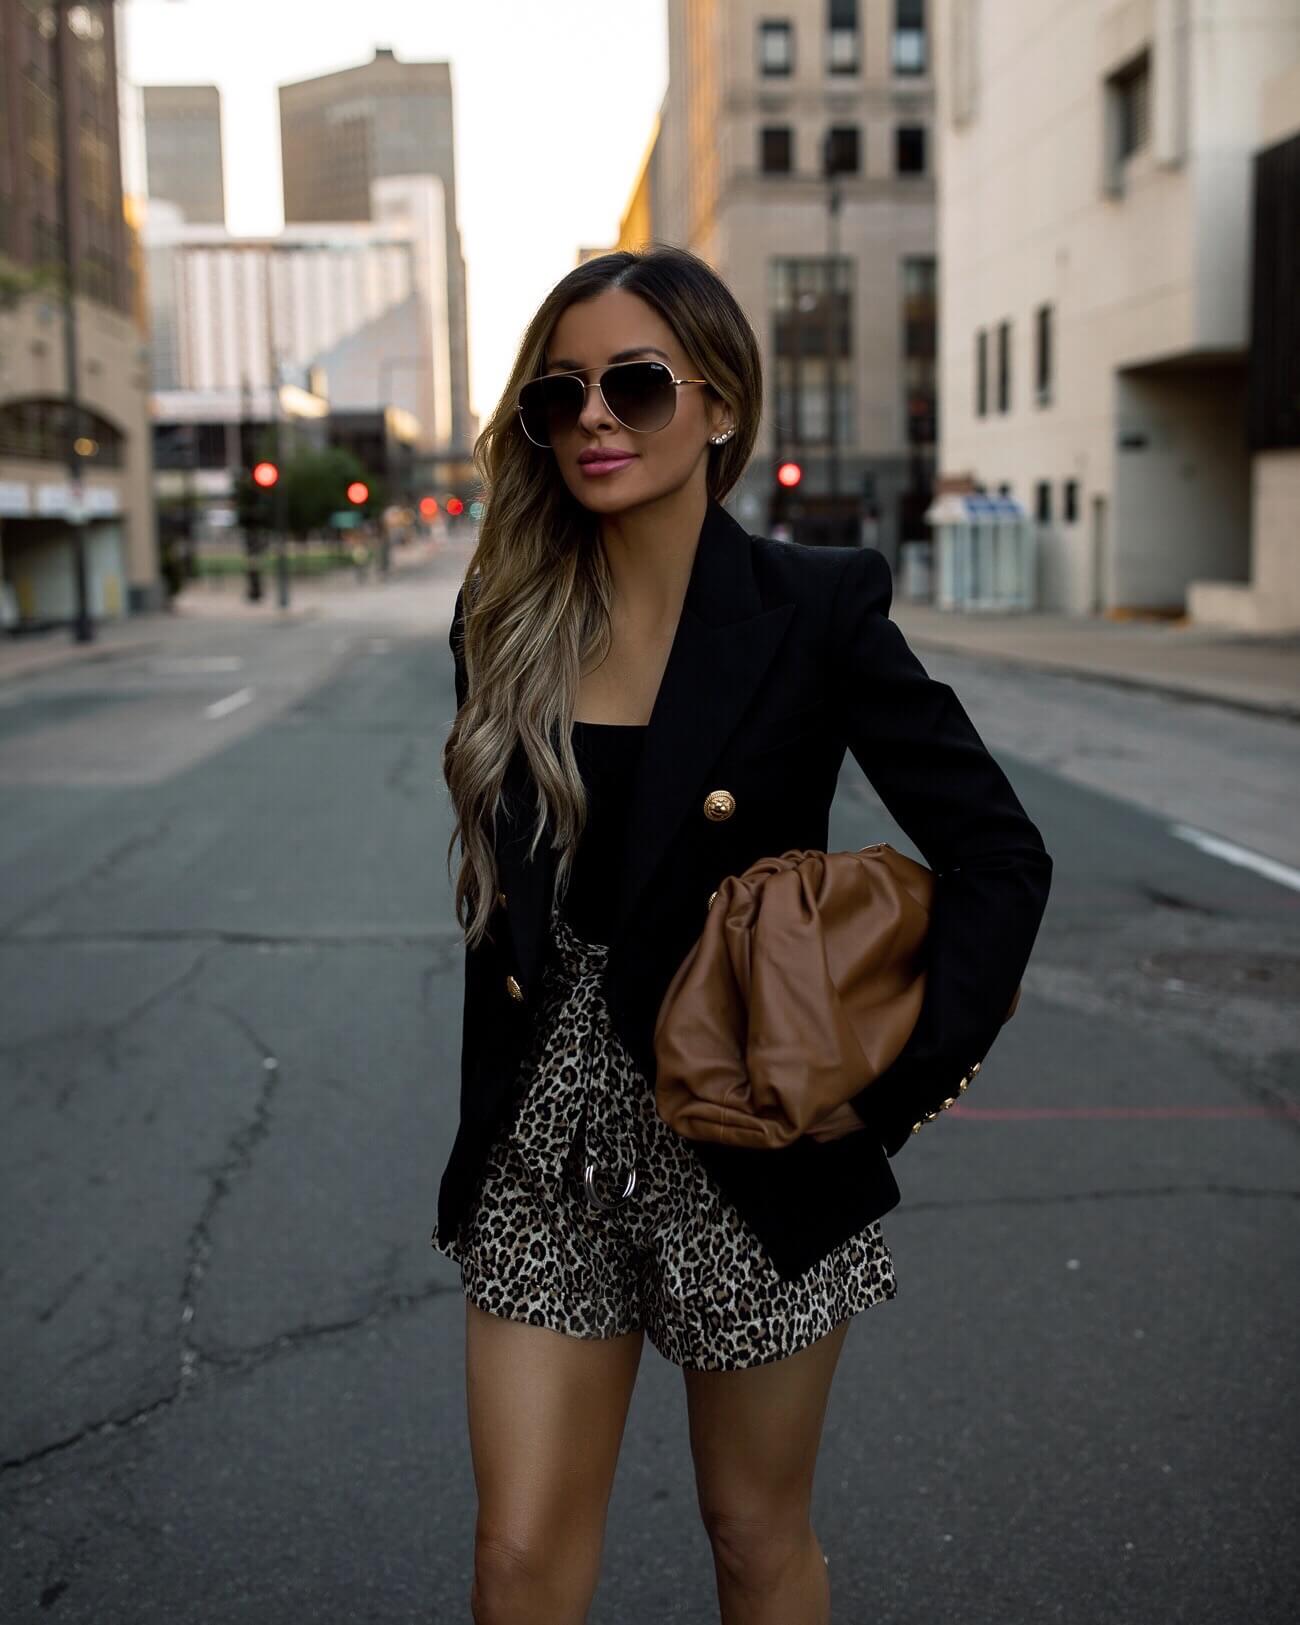 fashion blogger mia mia mine wearing leopard print shorts by marissa webb